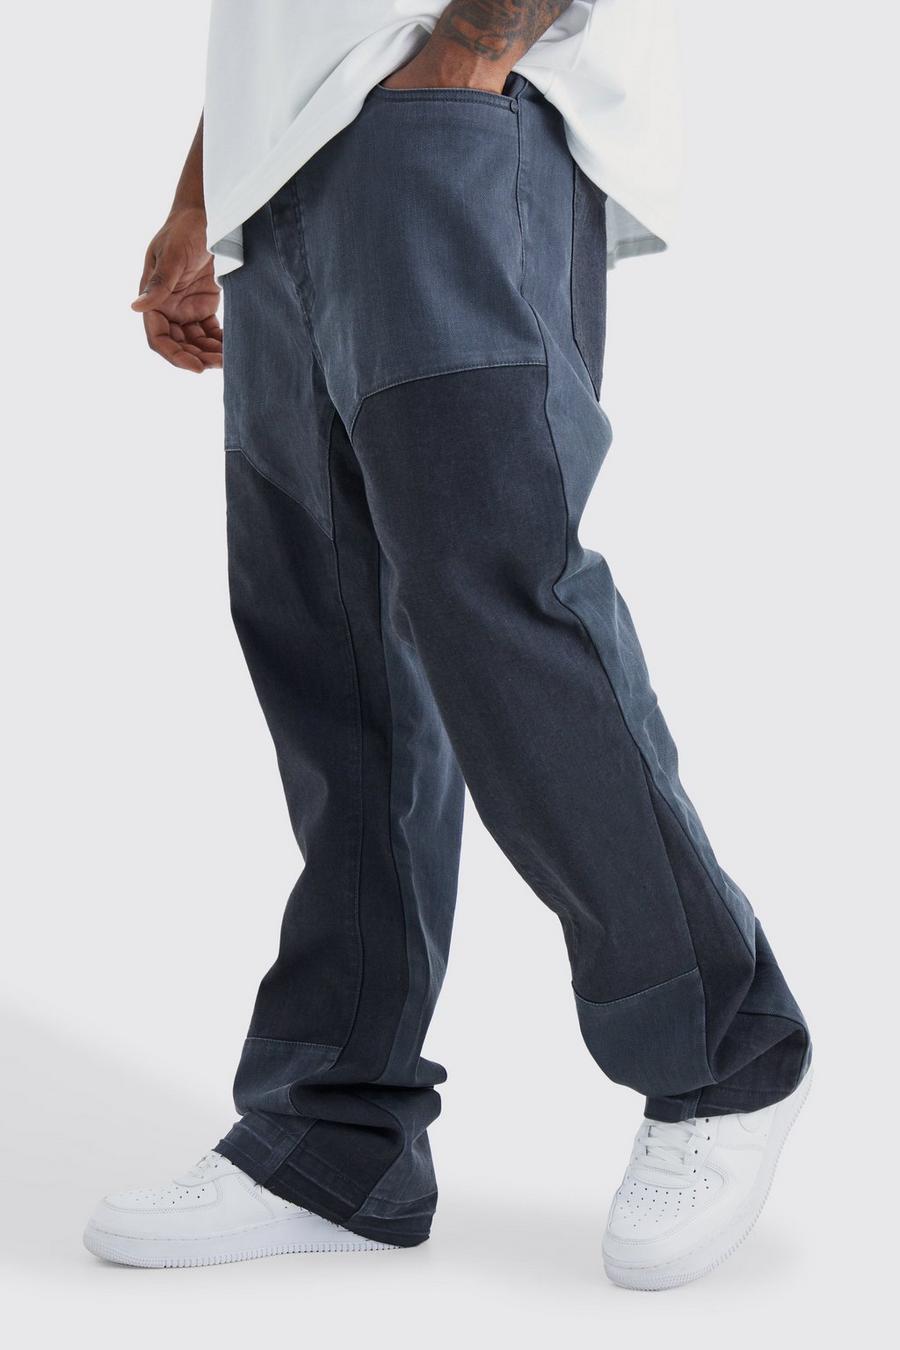 Jeans Plus Size Slim Fit in denim rigido sovratinto stile Carpenter, Charcoal grigio